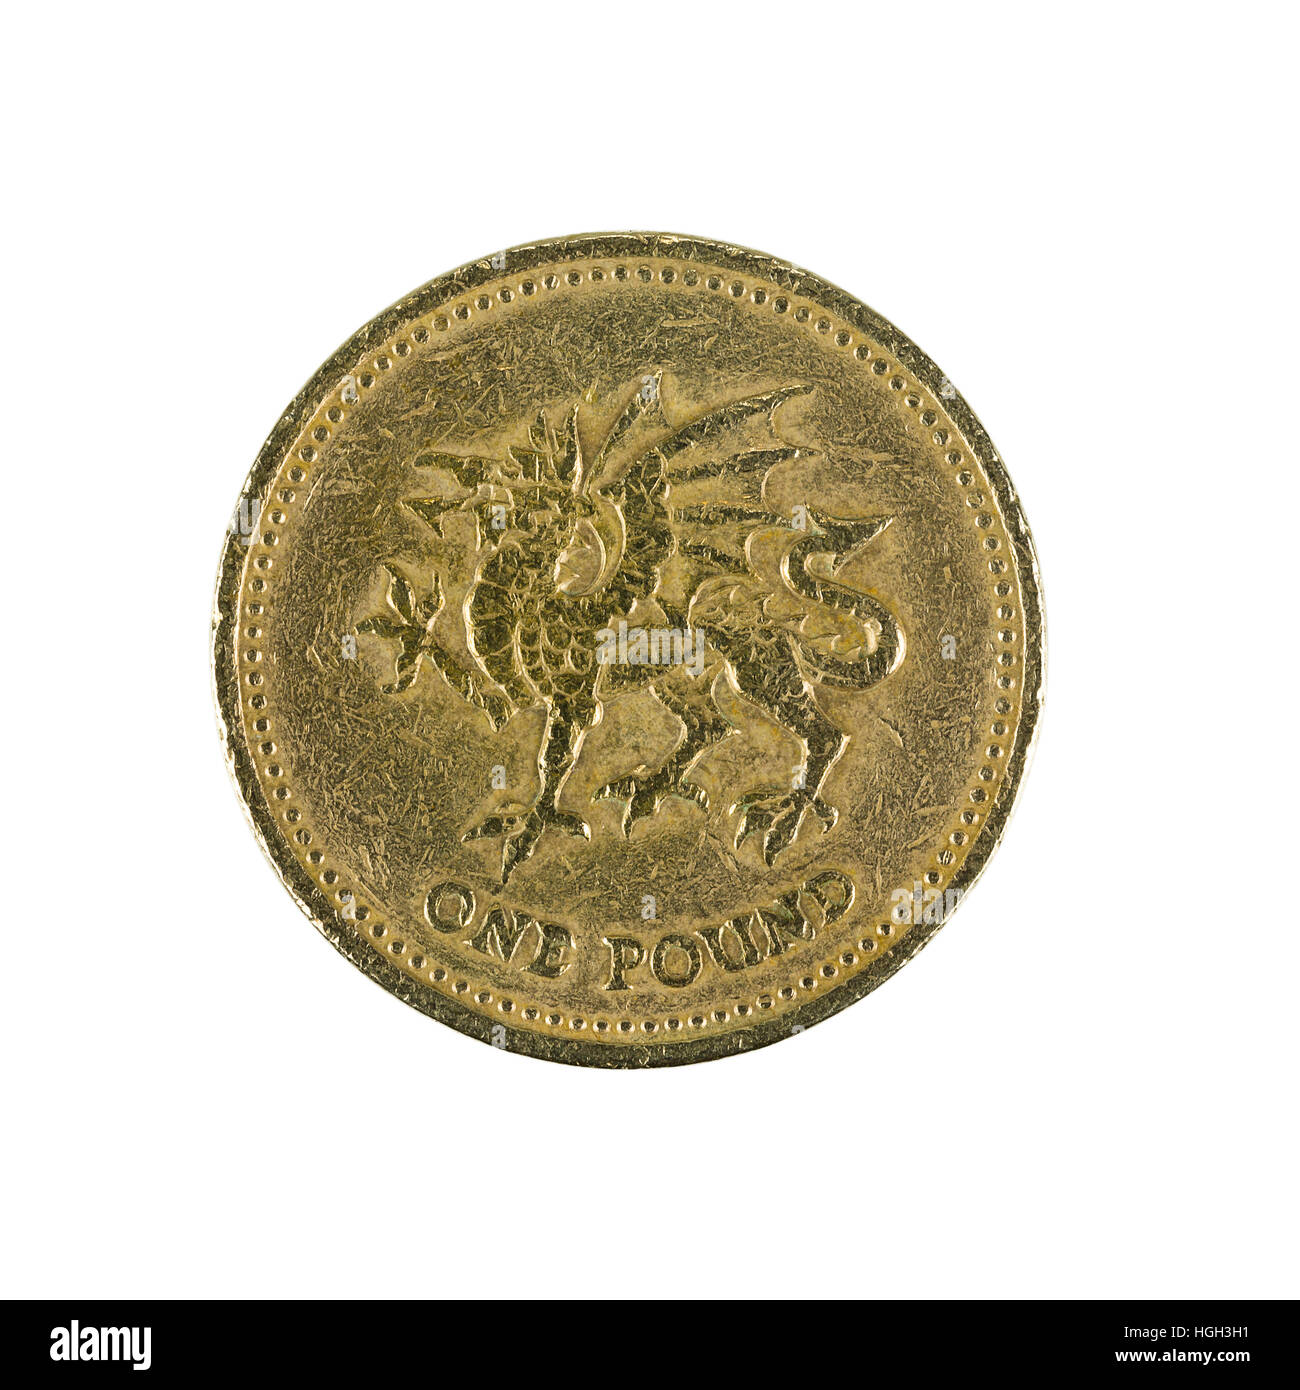 British one pound coin, 2000 Stock Photo